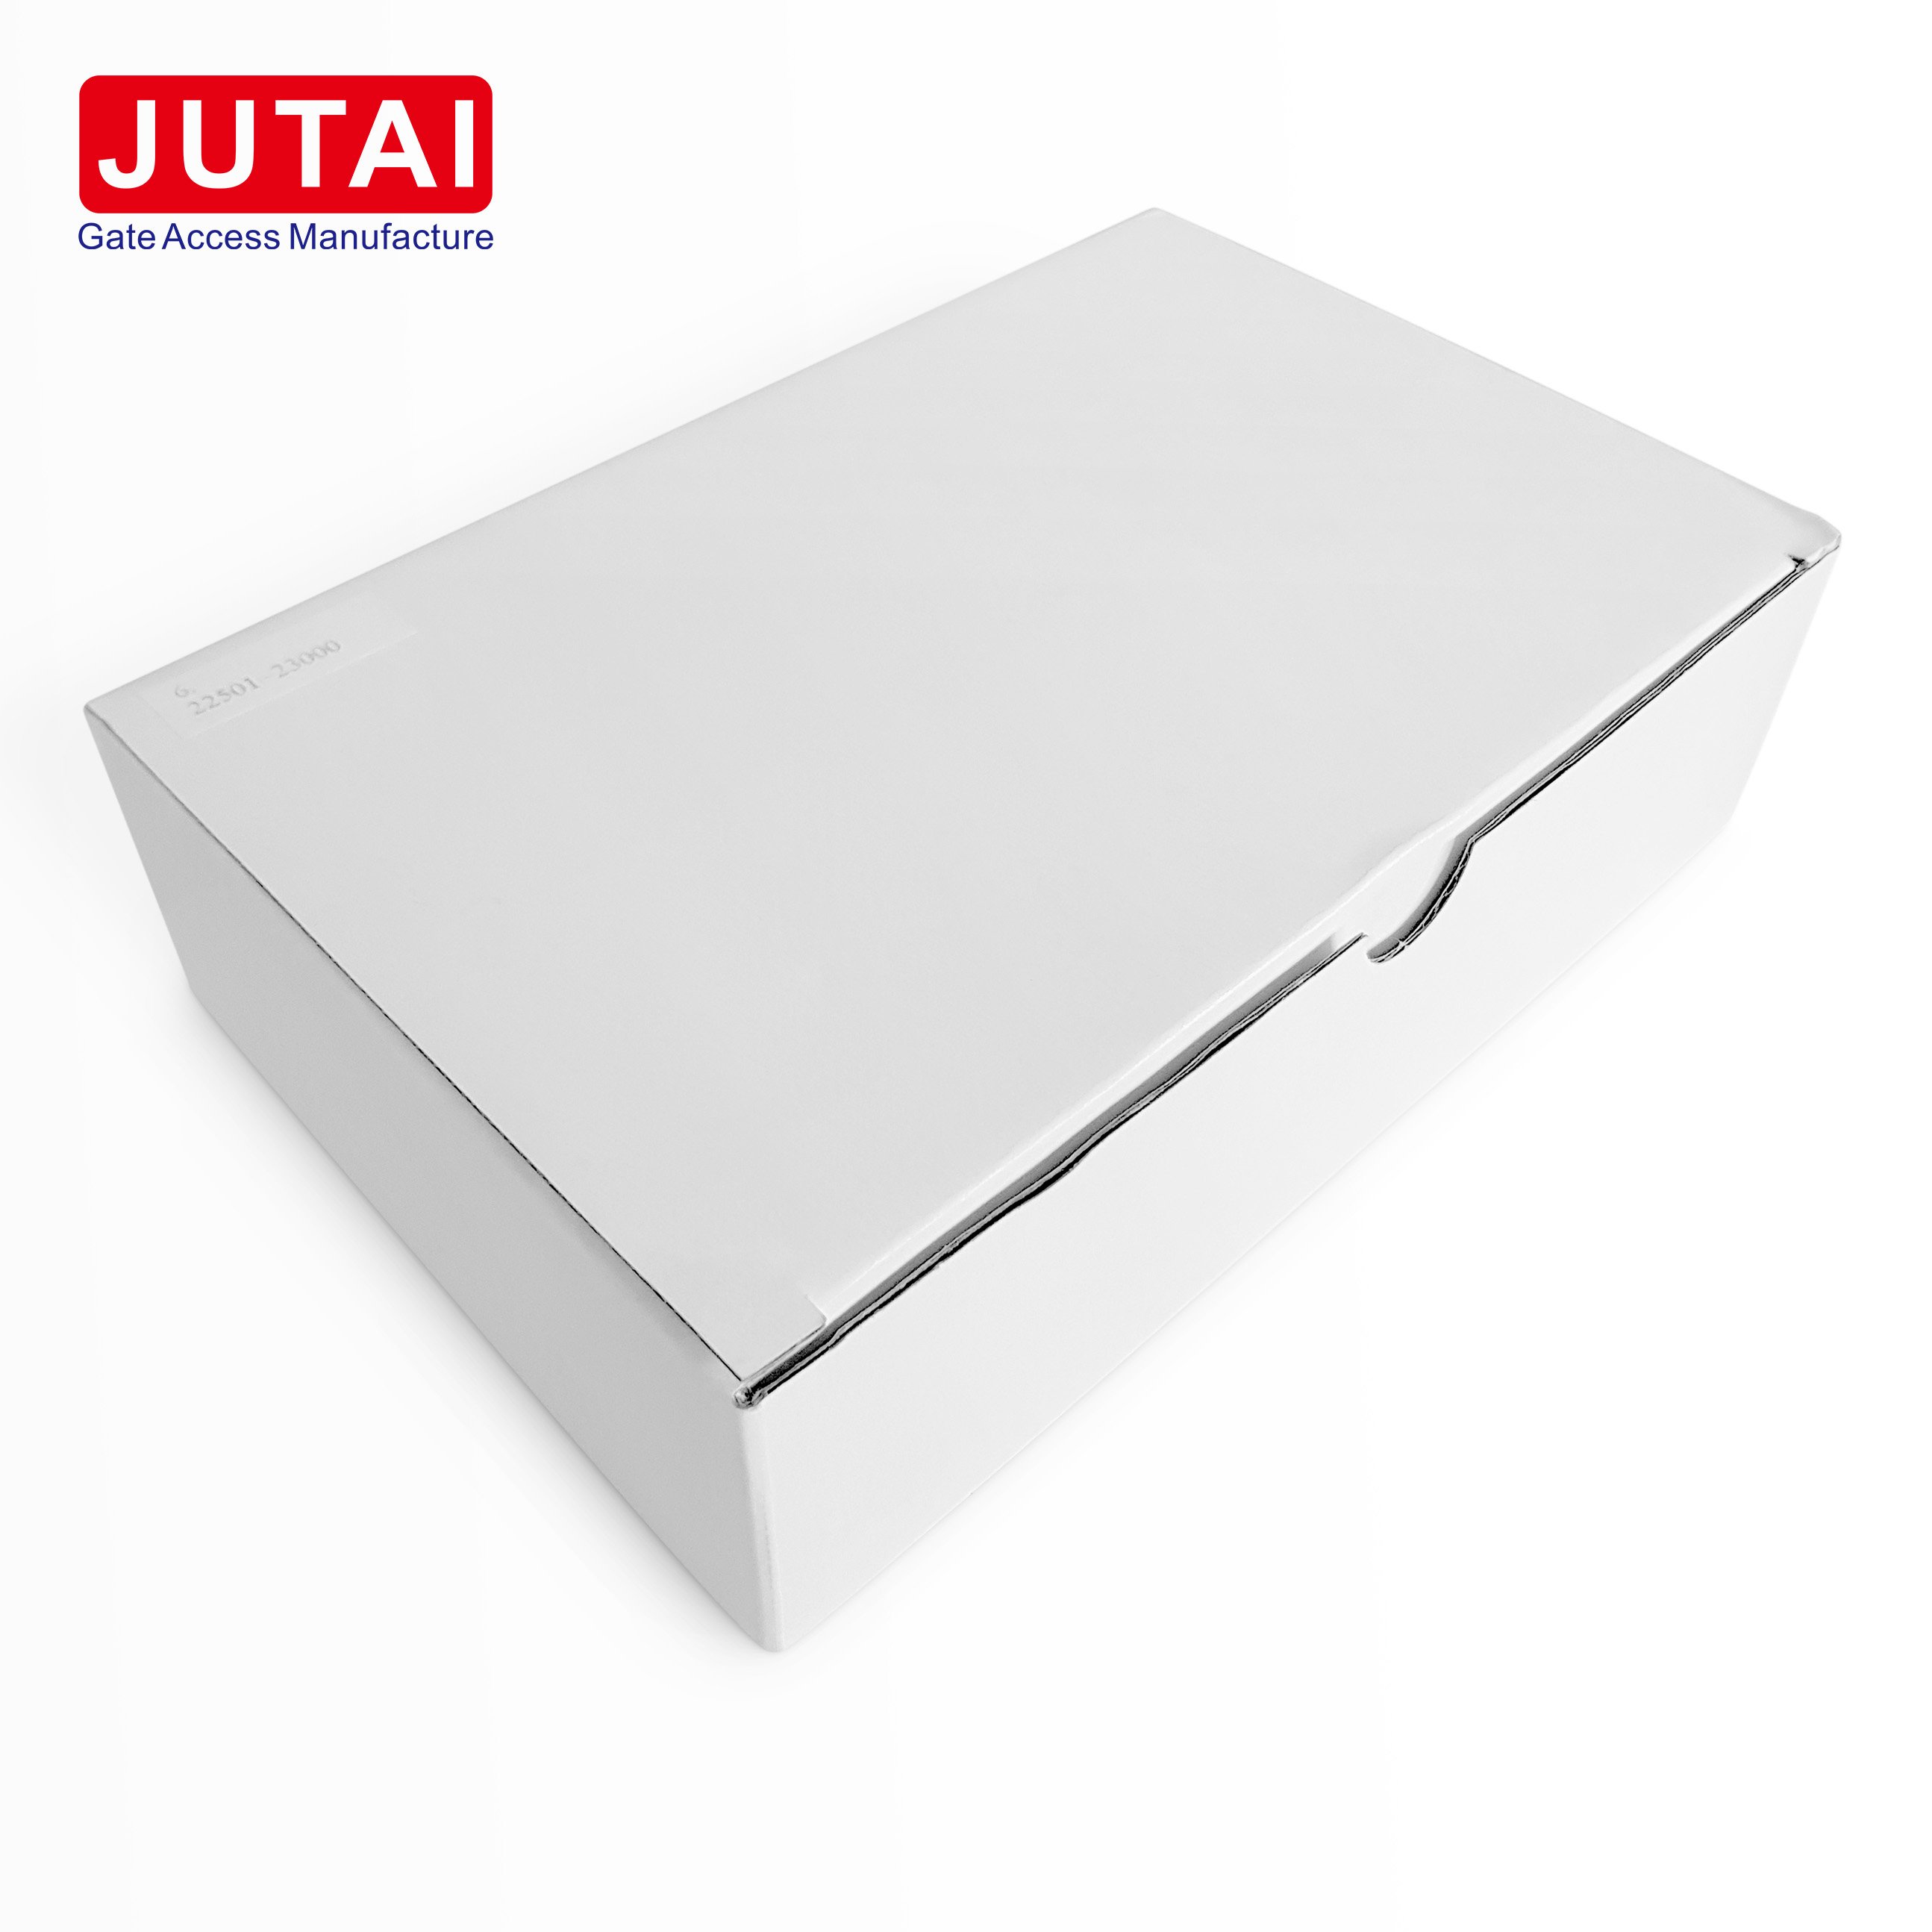 JUTAI 7-9M ملصق UHF طويل المدى غير فعال لتطبيق الوصول إلى بوابة الحاجز السكني